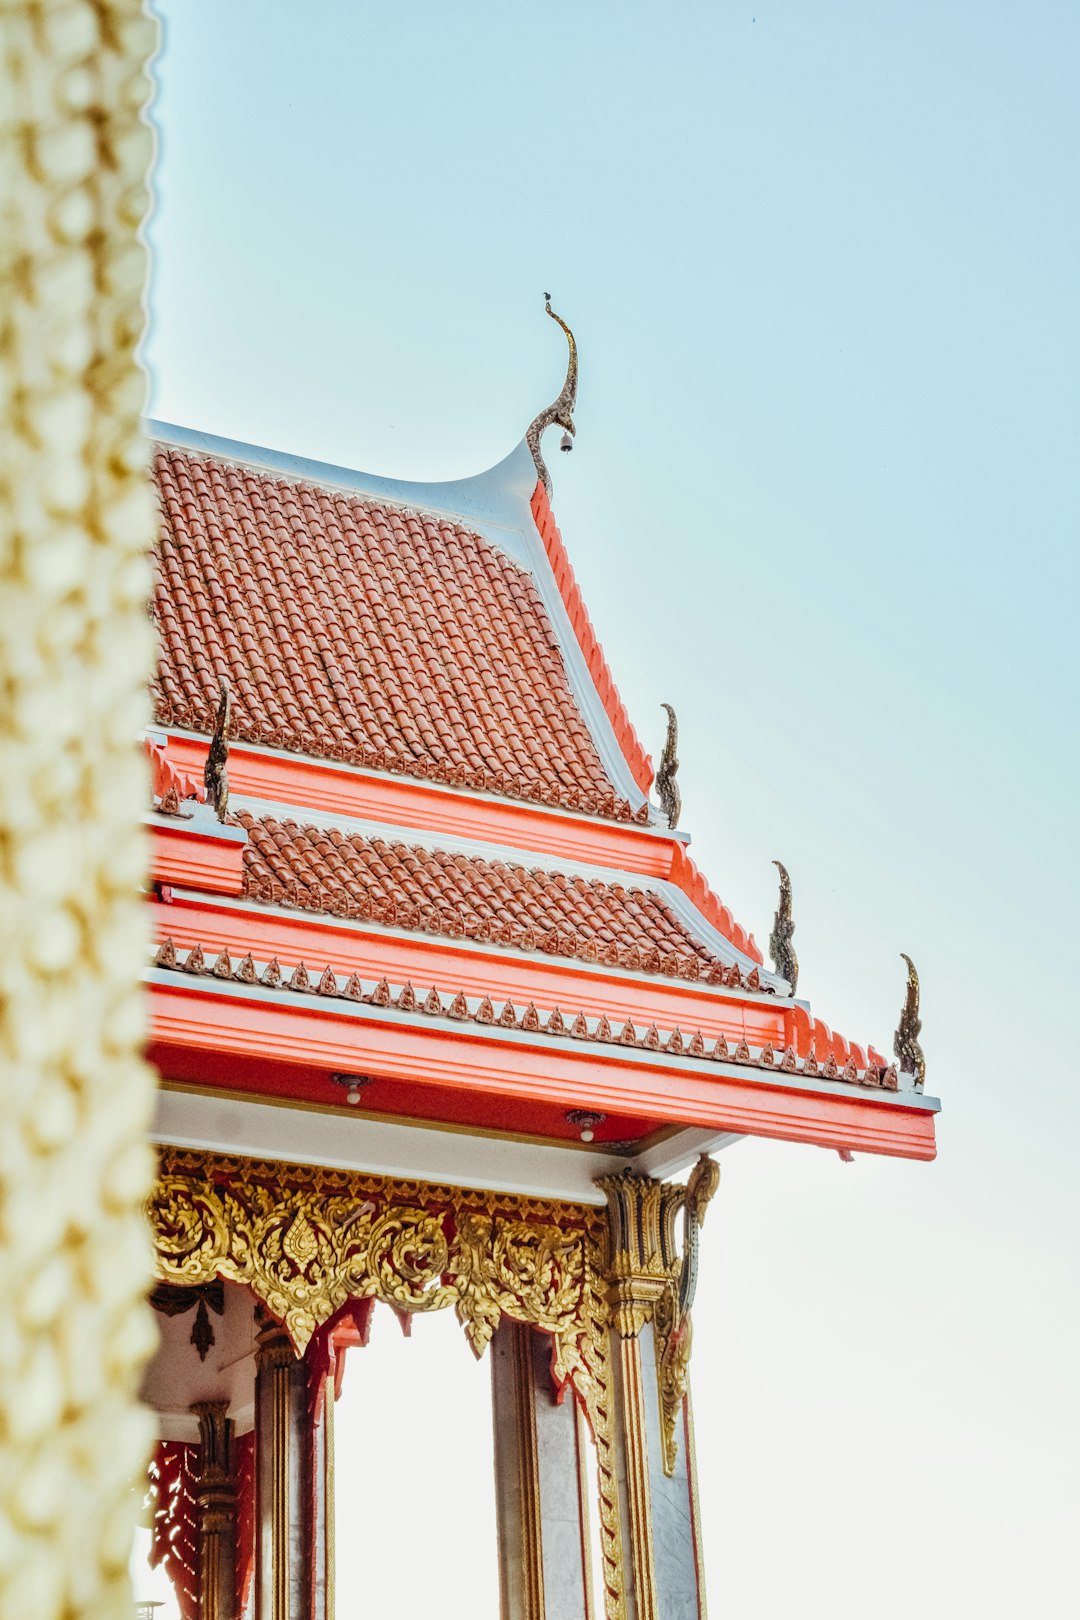 Temple photo spot Wat Chalong Temple Thailand